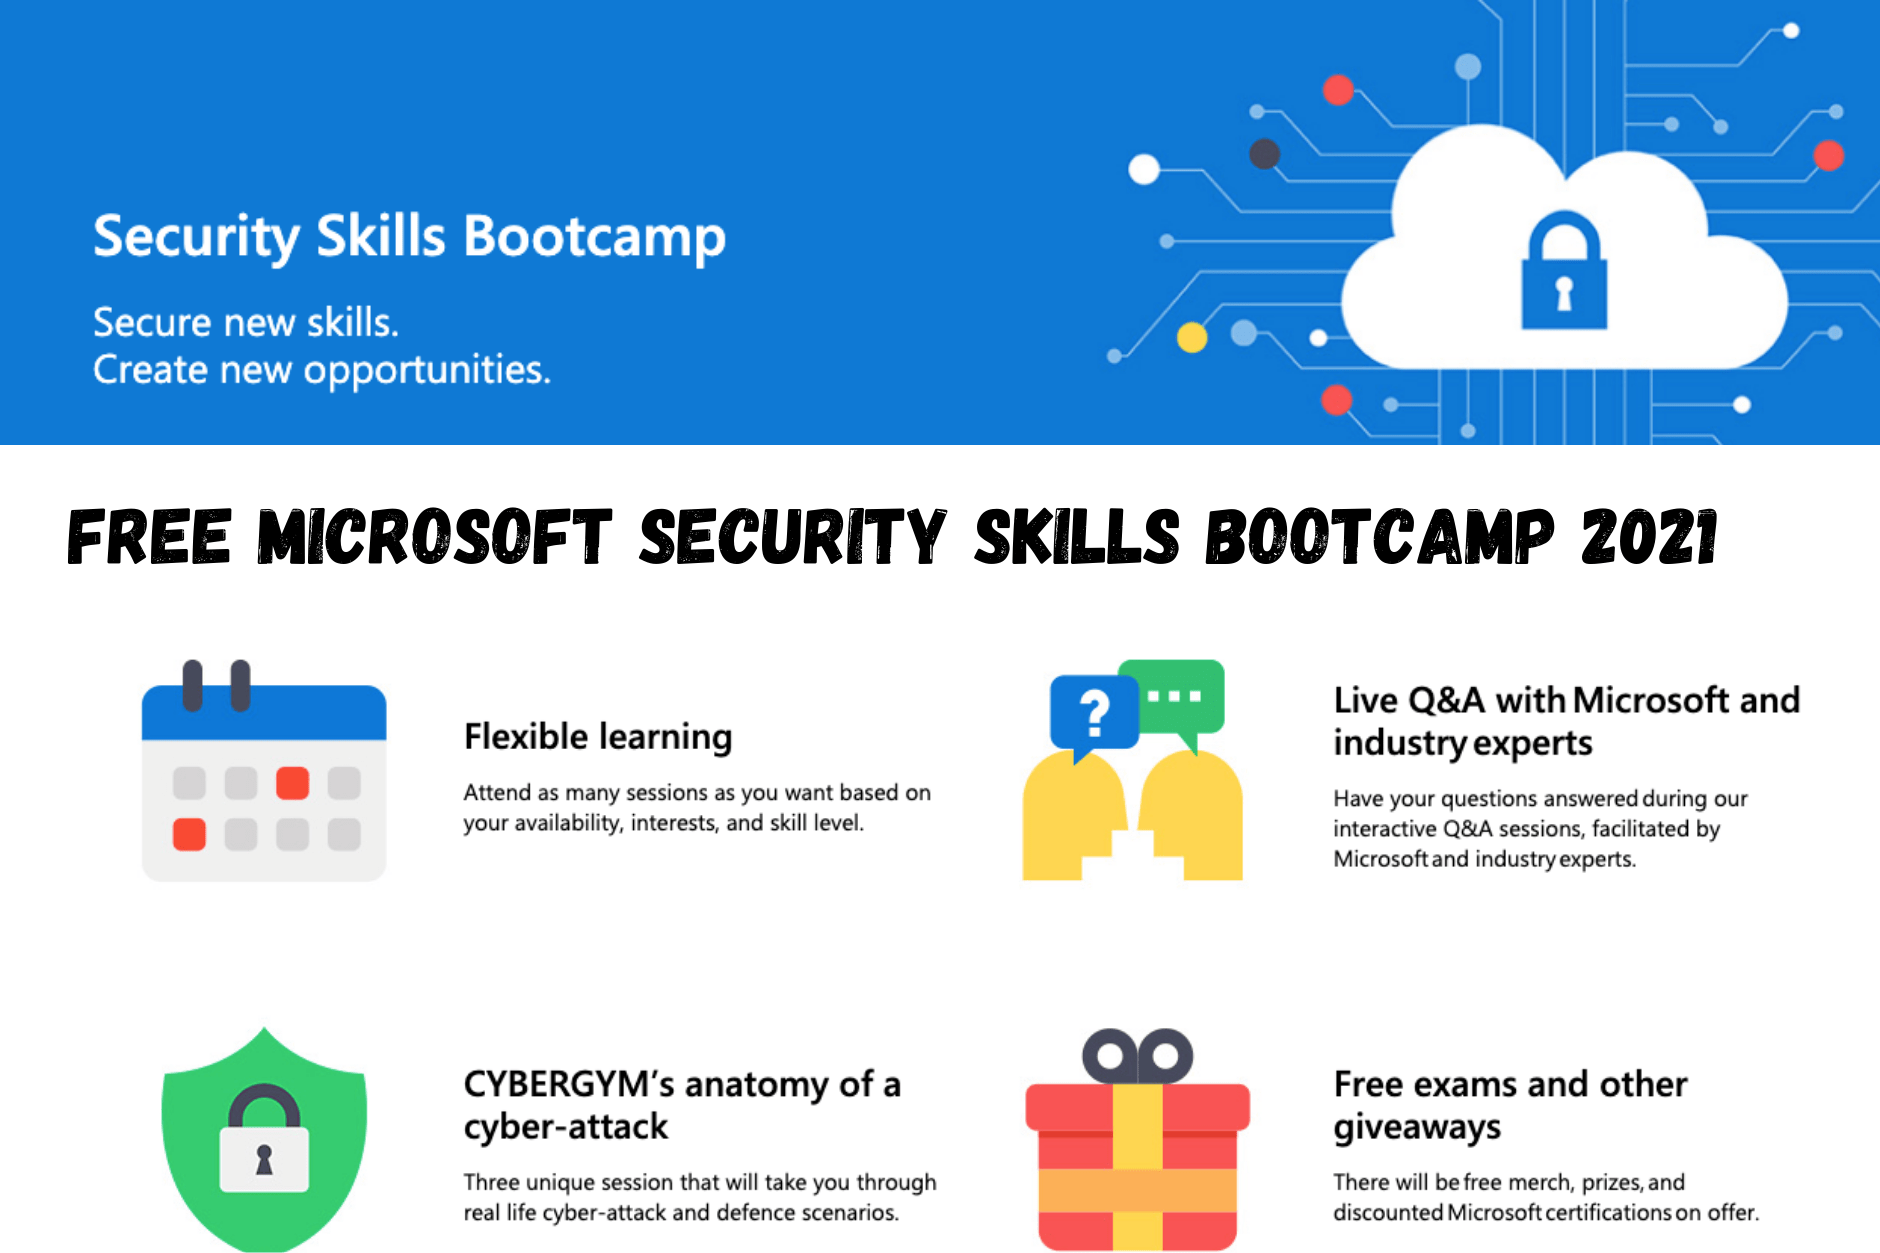 Free Microsoft Security Skills Bootcamp 2021